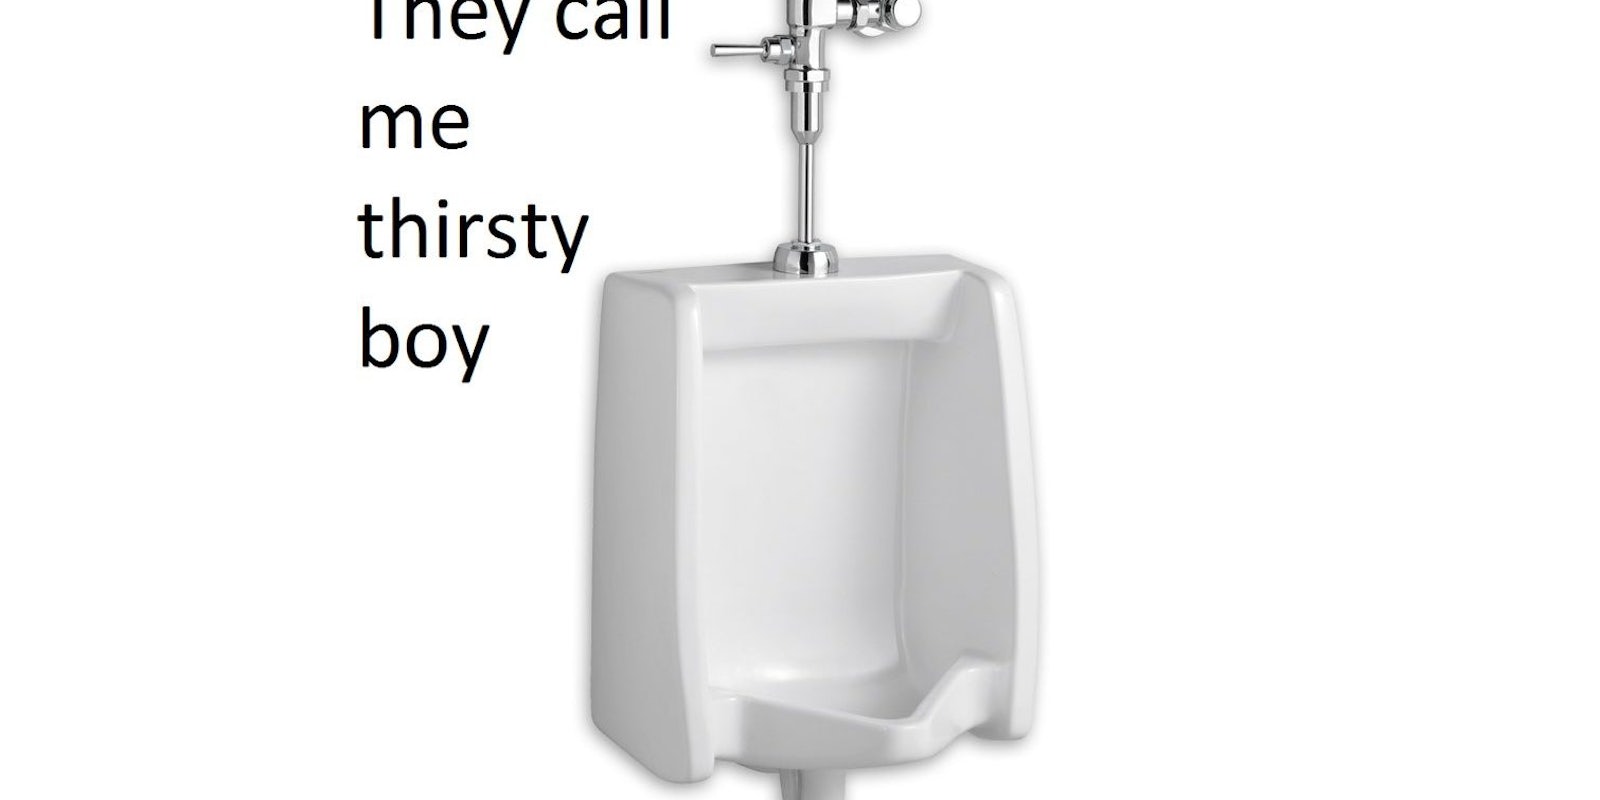 Thirsty boy urinal meme